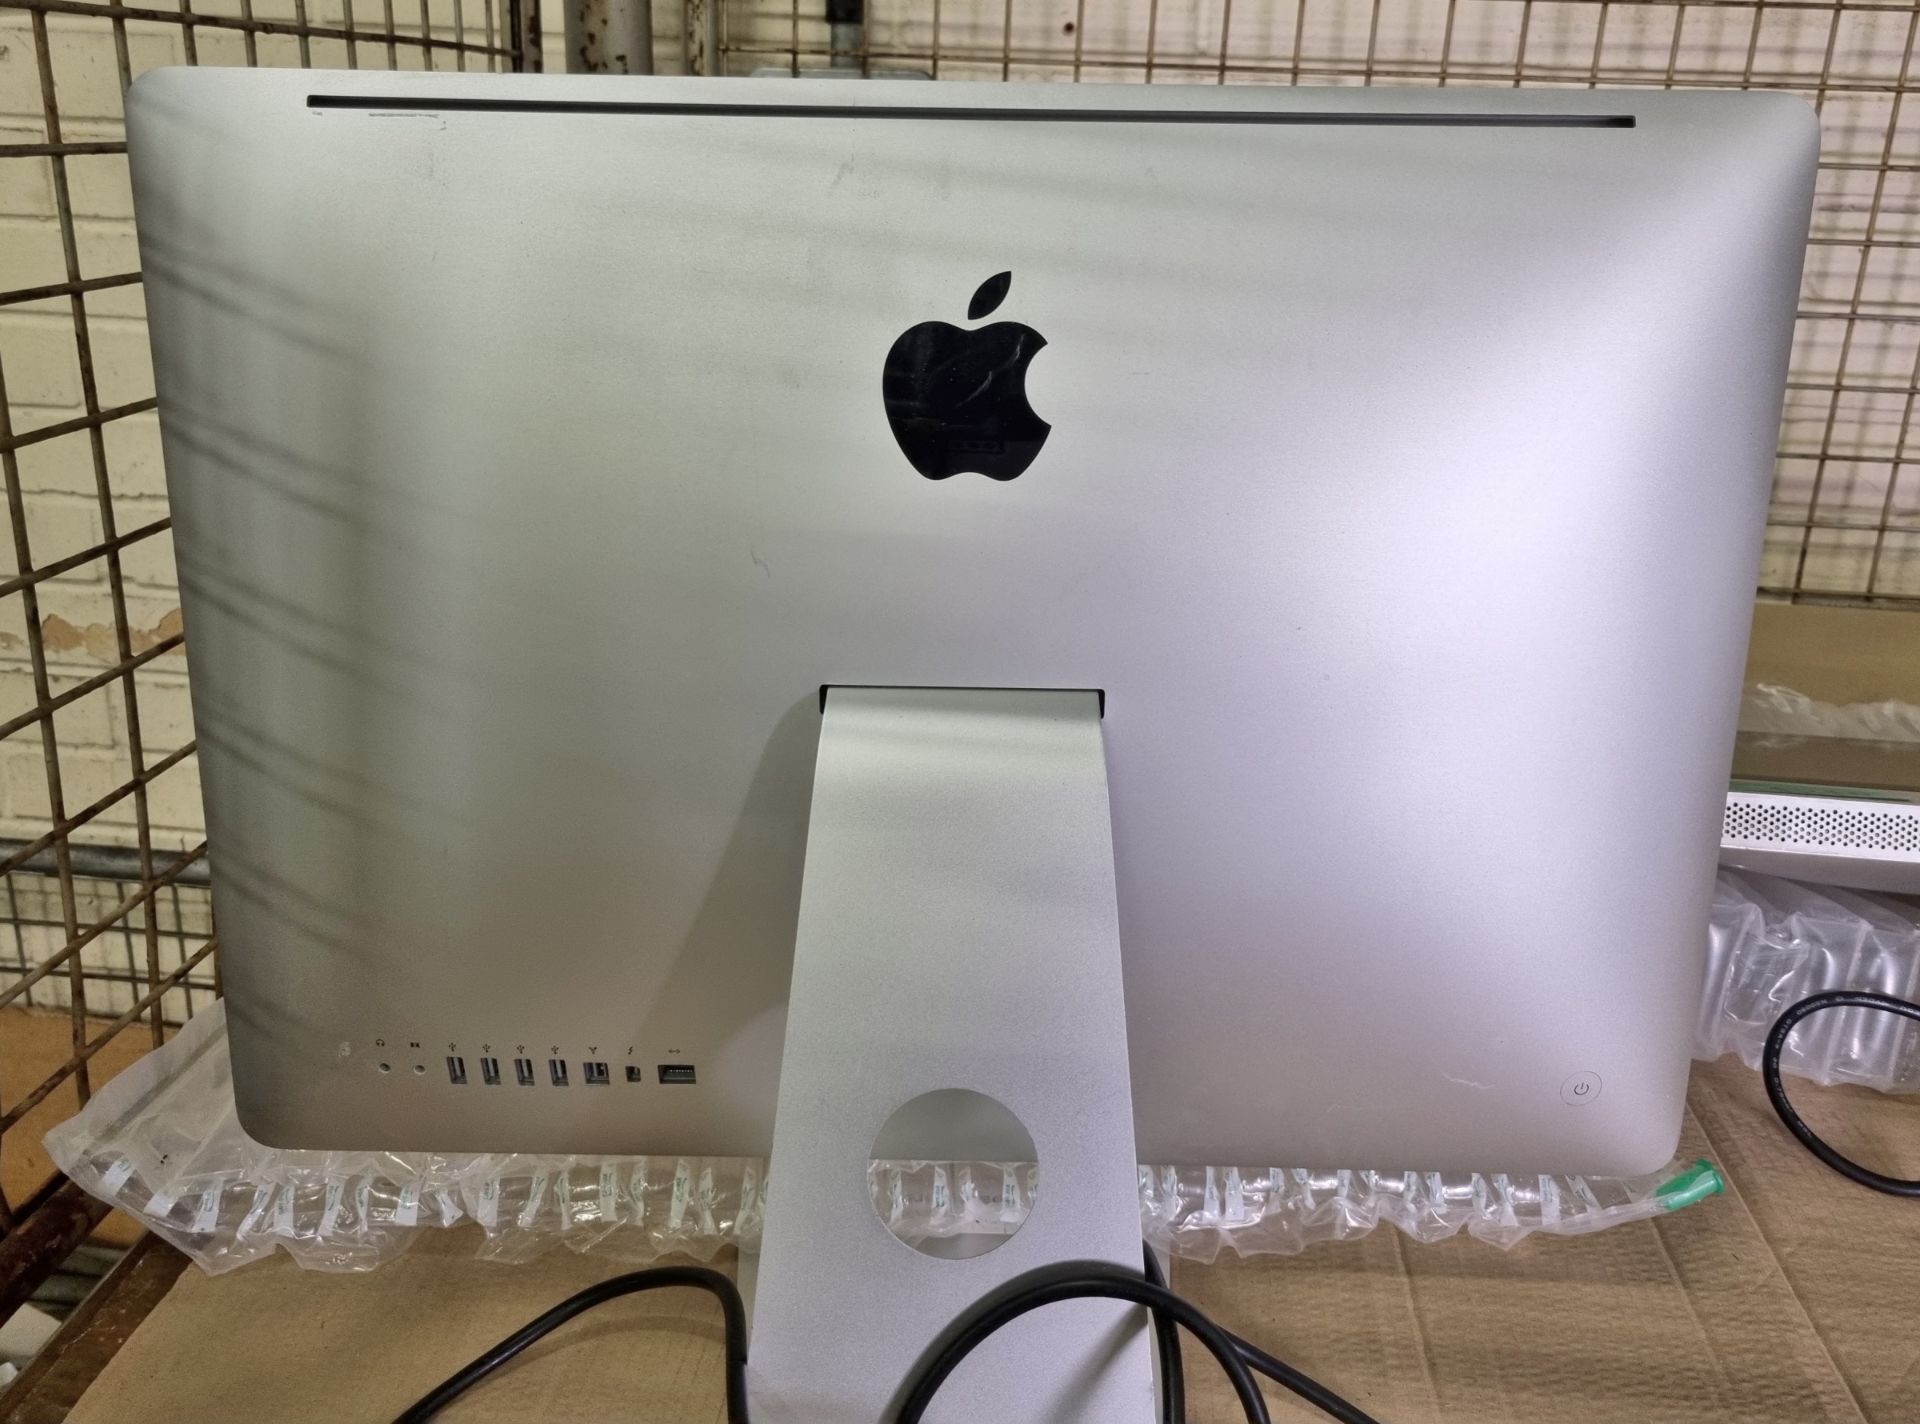 Apple iMac 21.5” OS X High Sierra Intel Core i5 Quad Core 4GB Memory 500GB HD, WiFi, Bluetooth - Image 4 of 4